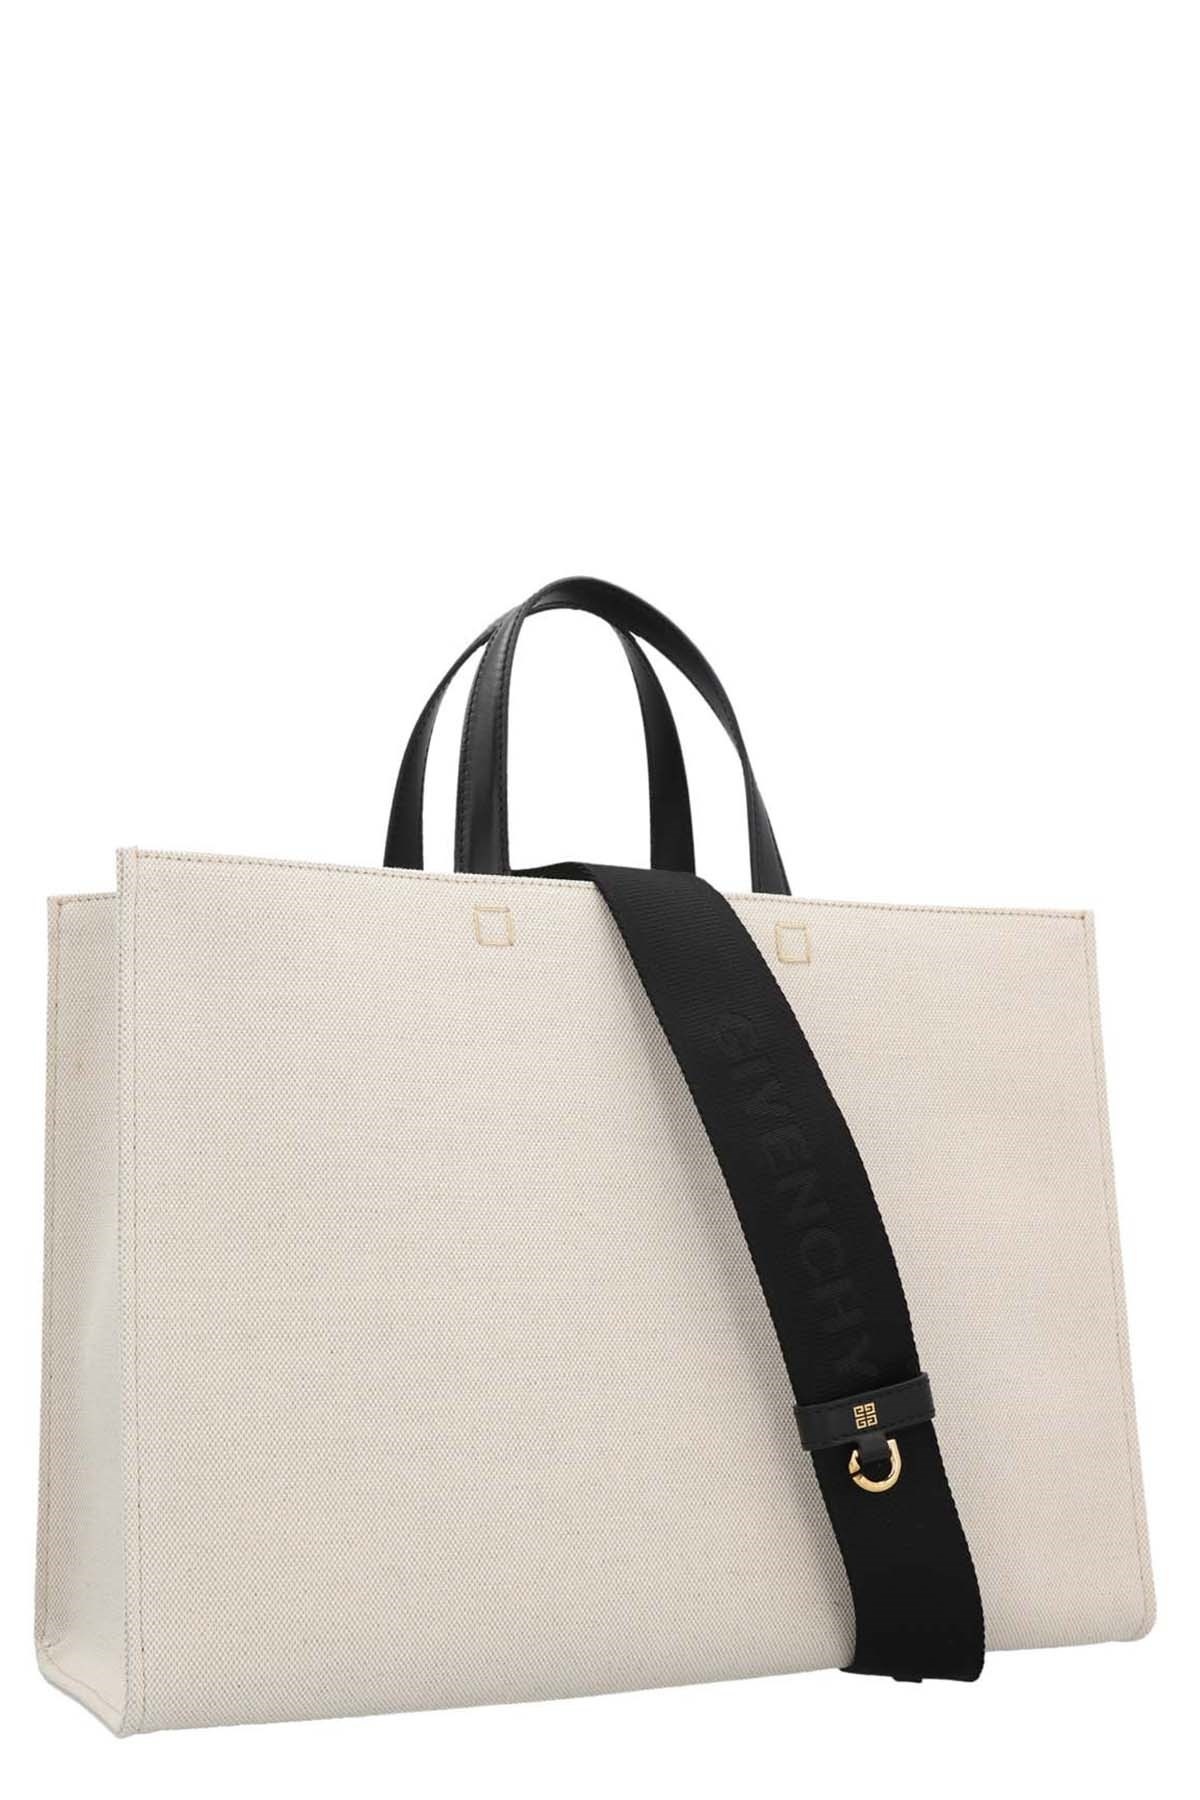 'G' midi shopping bag - 2